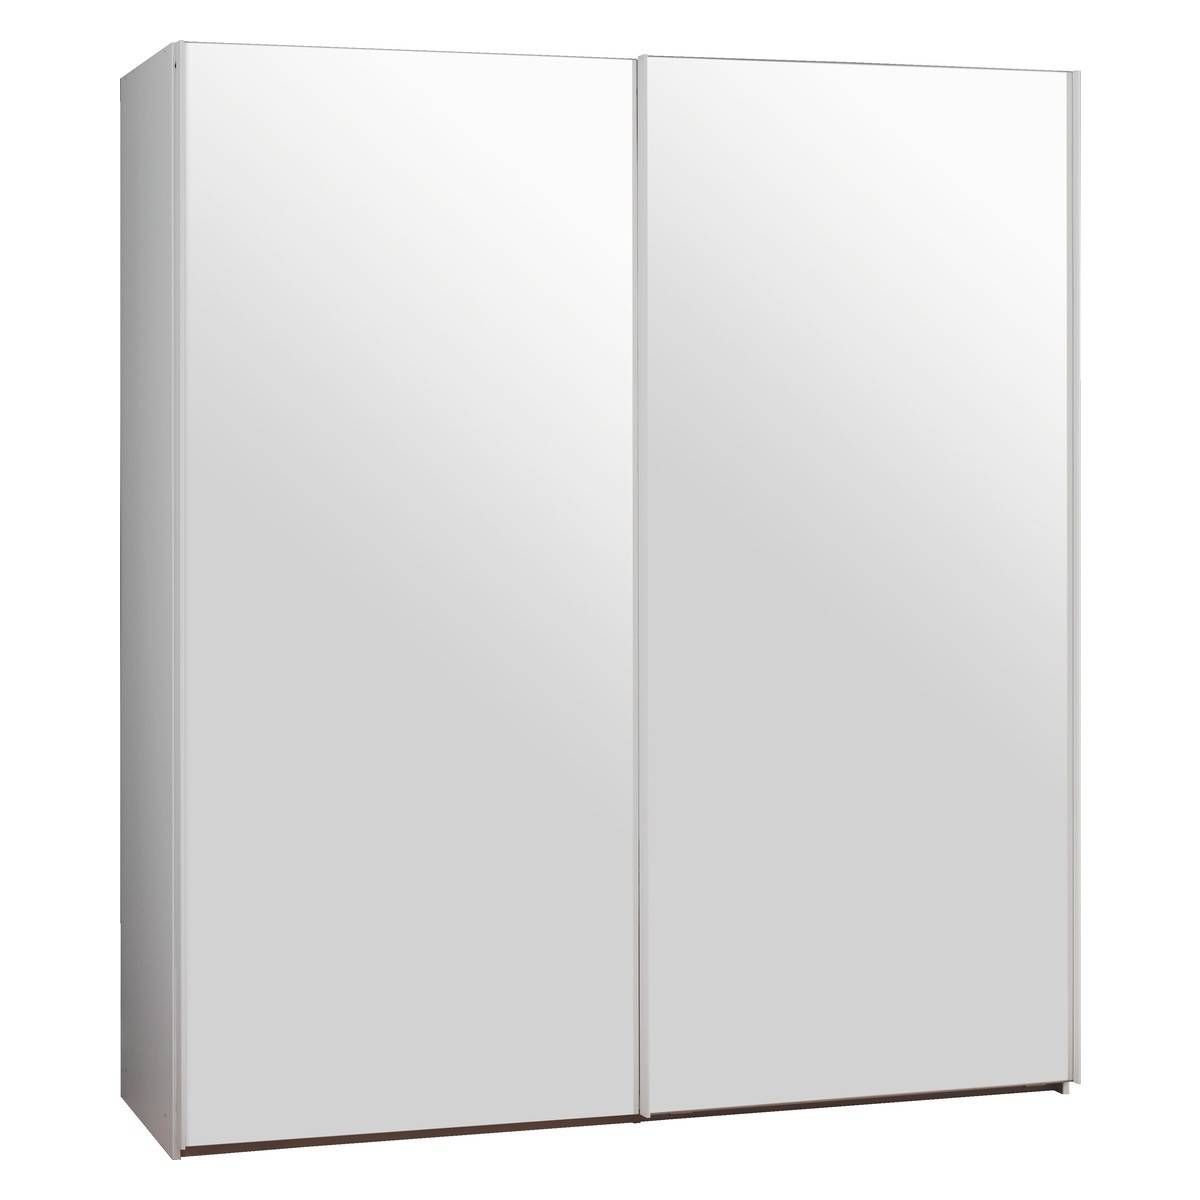 Kripton Mirrored 2 Door Sliding Wardrobe W160 X H240cm | Buy Now Inside Double Mirrored Wardrobes (View 4 of 15)